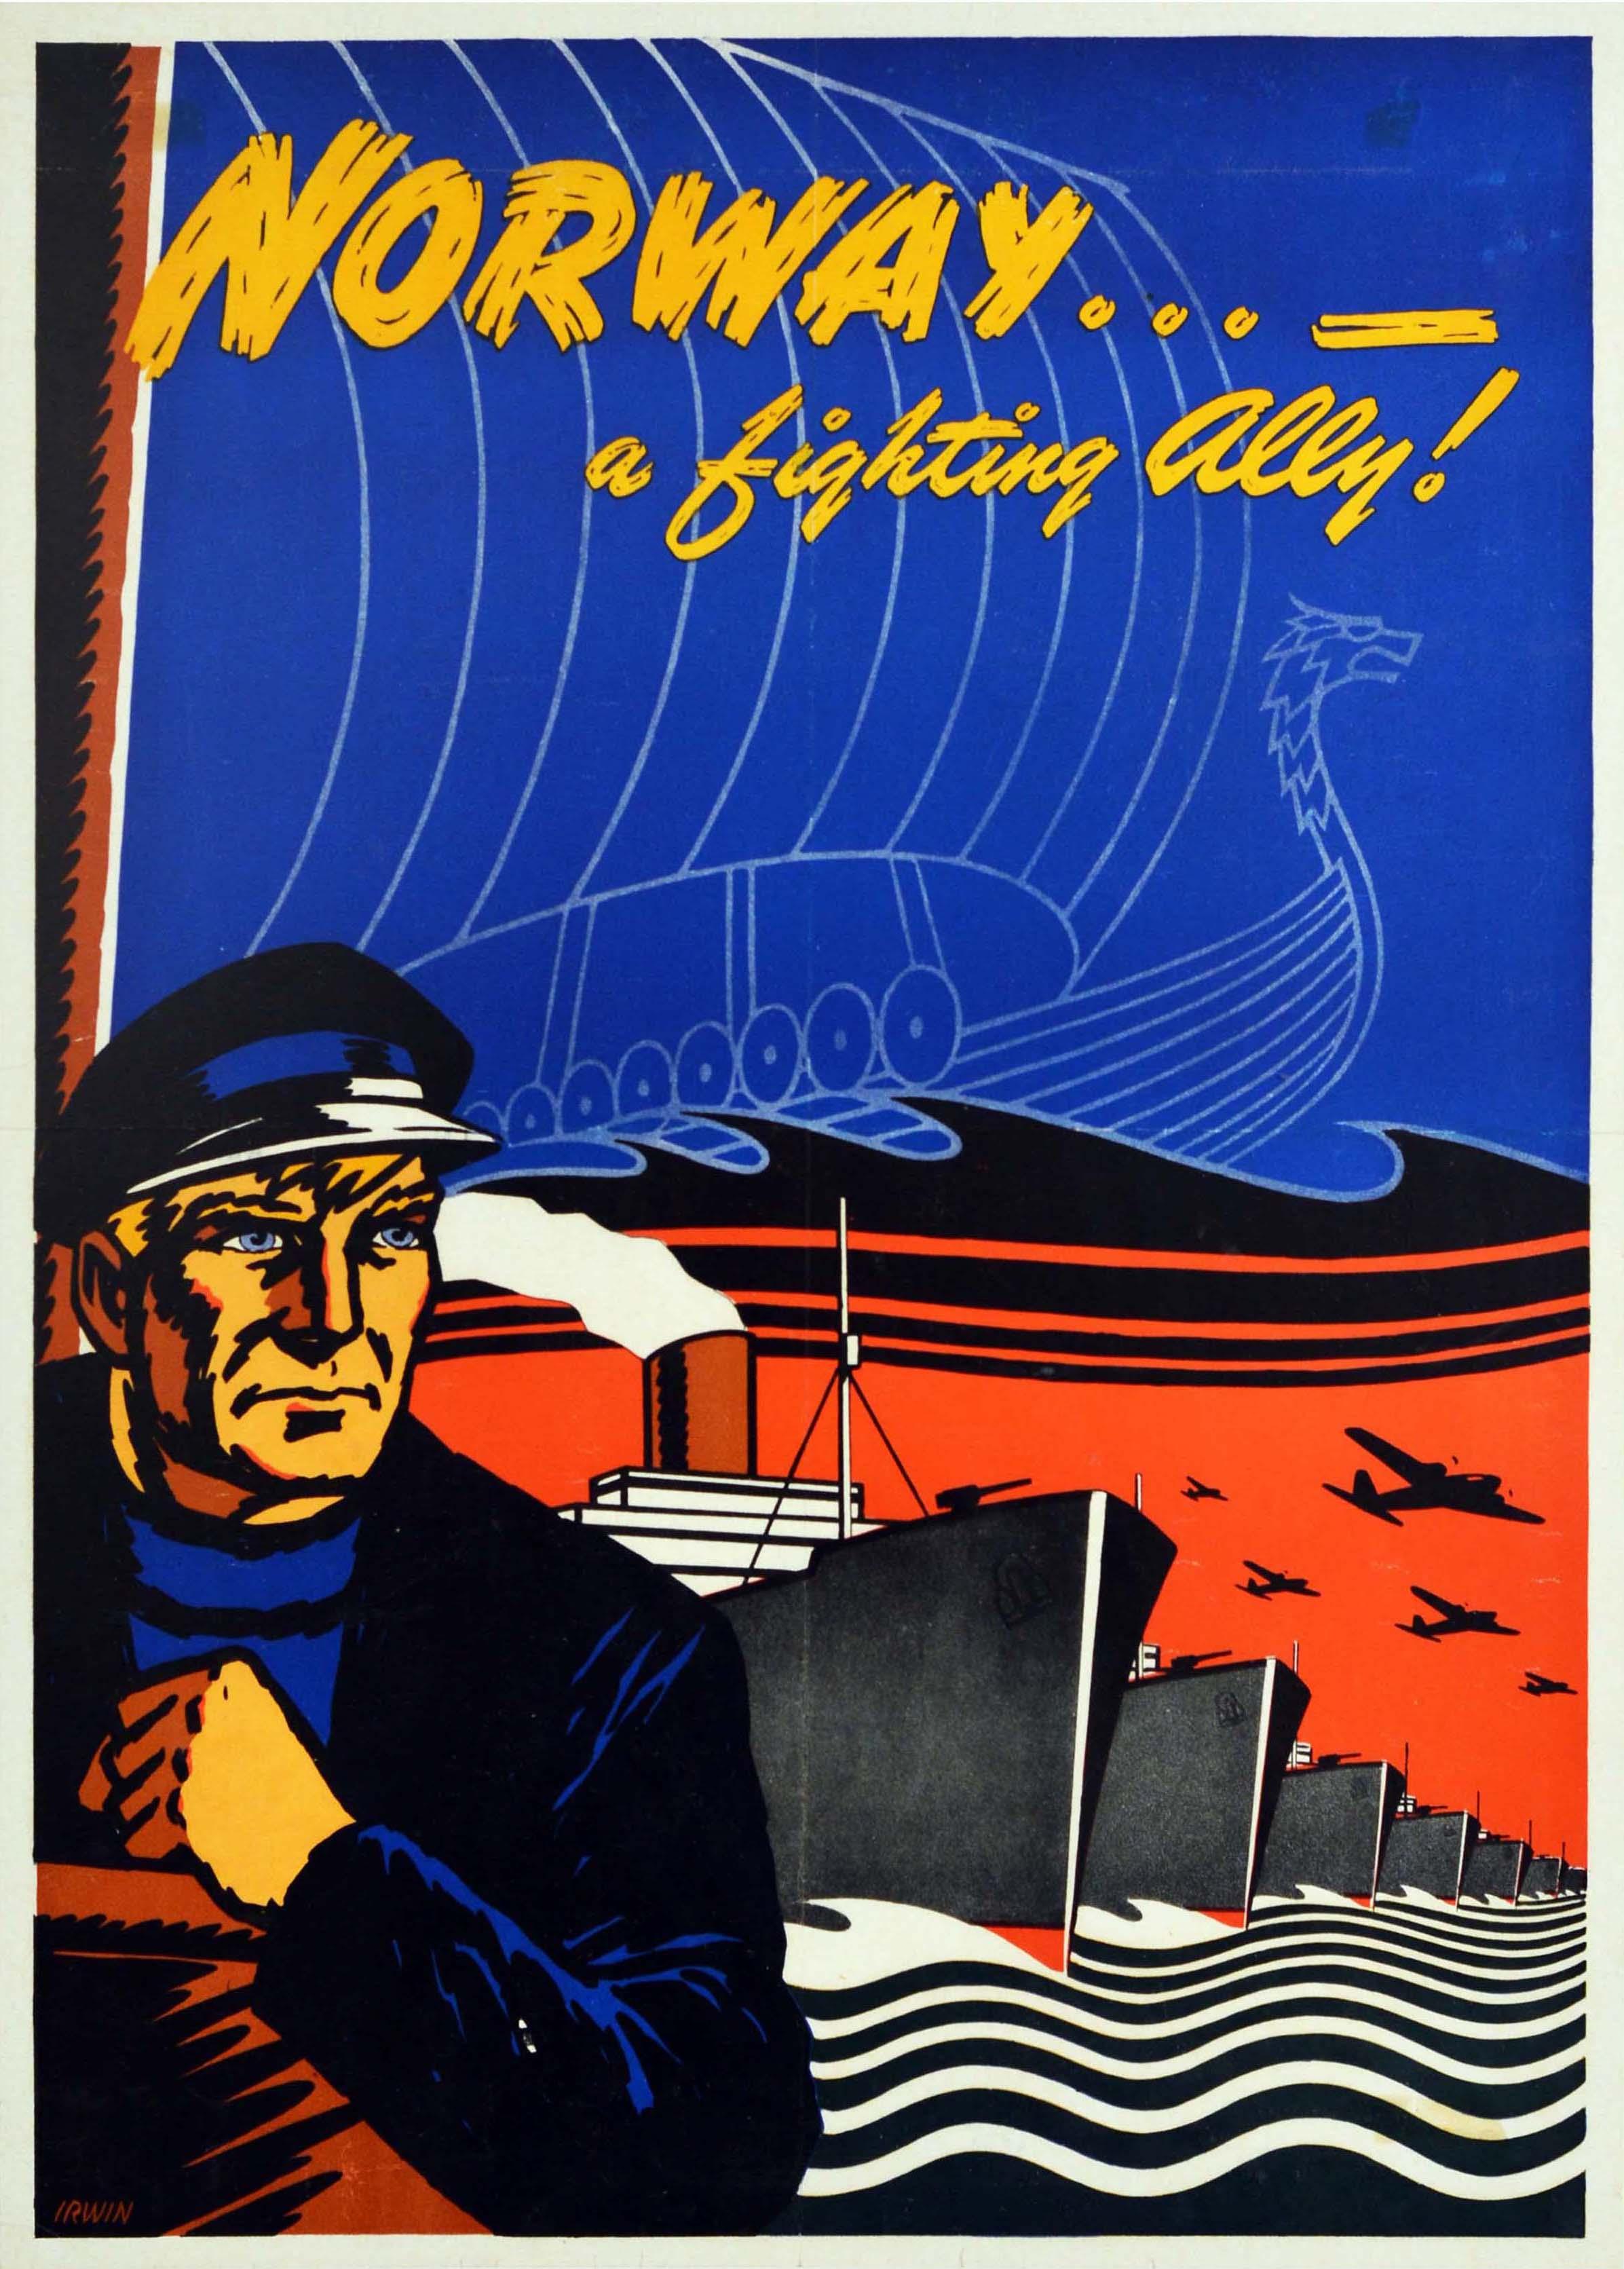 Irwin Print – Original Vintage WWII Poster Norwegen "A Fighting Ally Viking Boat War Ships Planes"